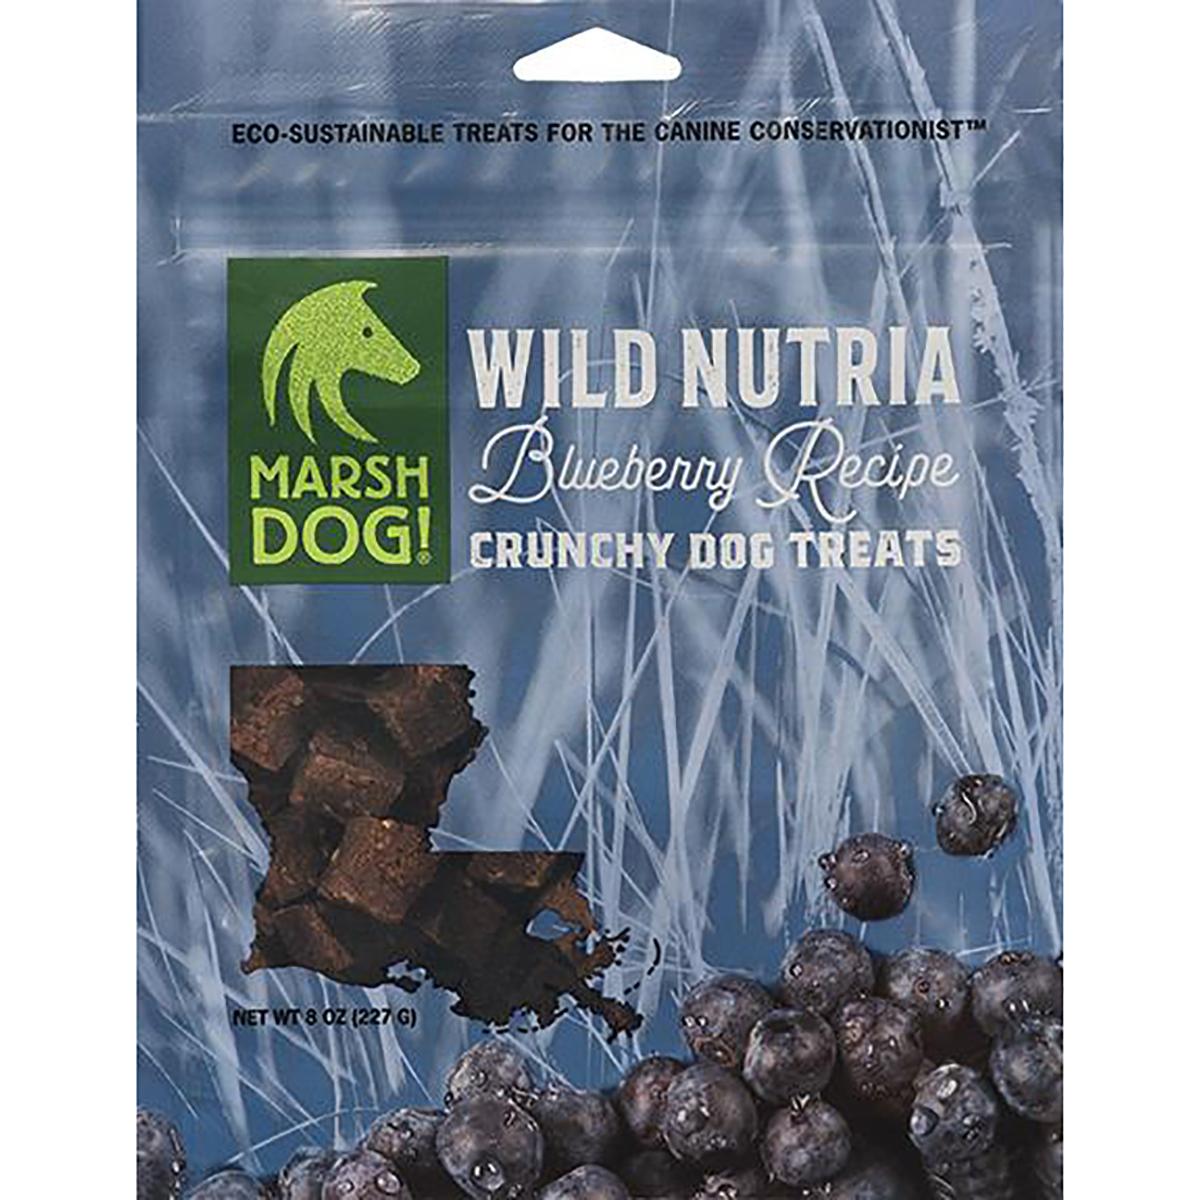 Marsh Dog Wild Nutria & Blueberry Recipe Crunchy Dog Treats